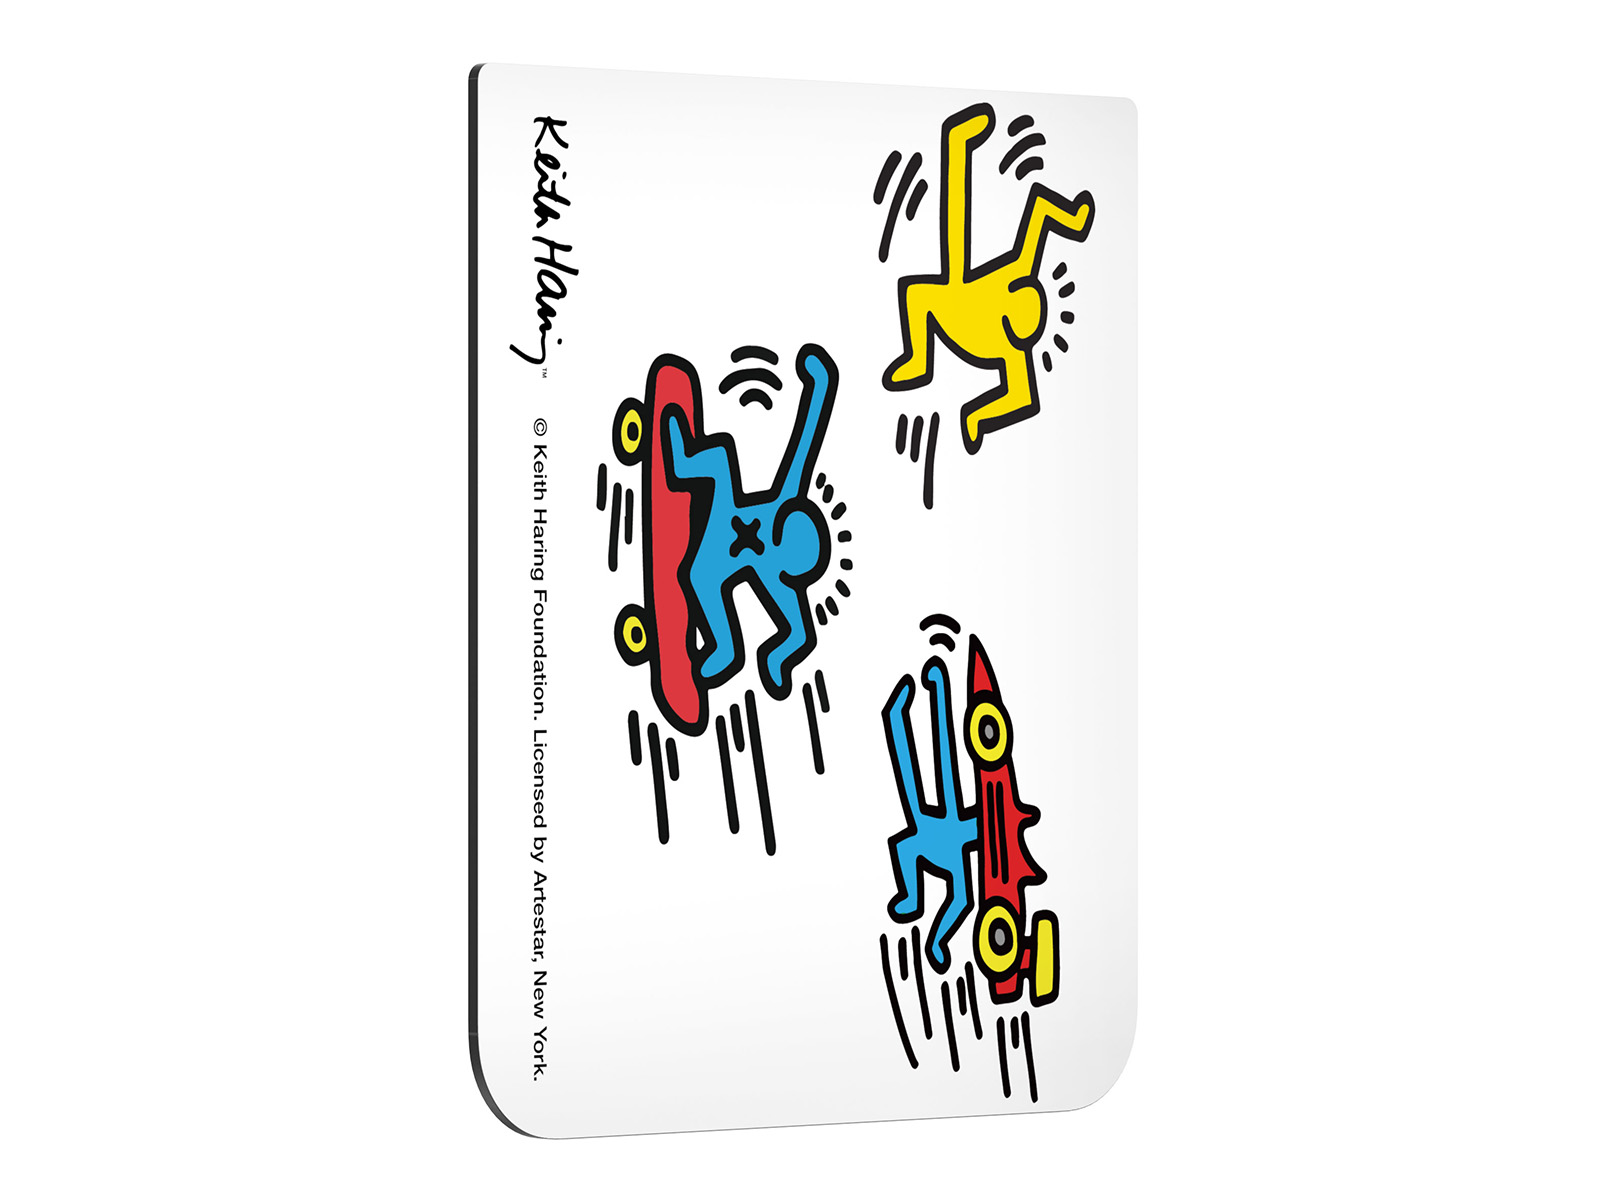 Thumbnail image of Keith Haring People Interactive Card